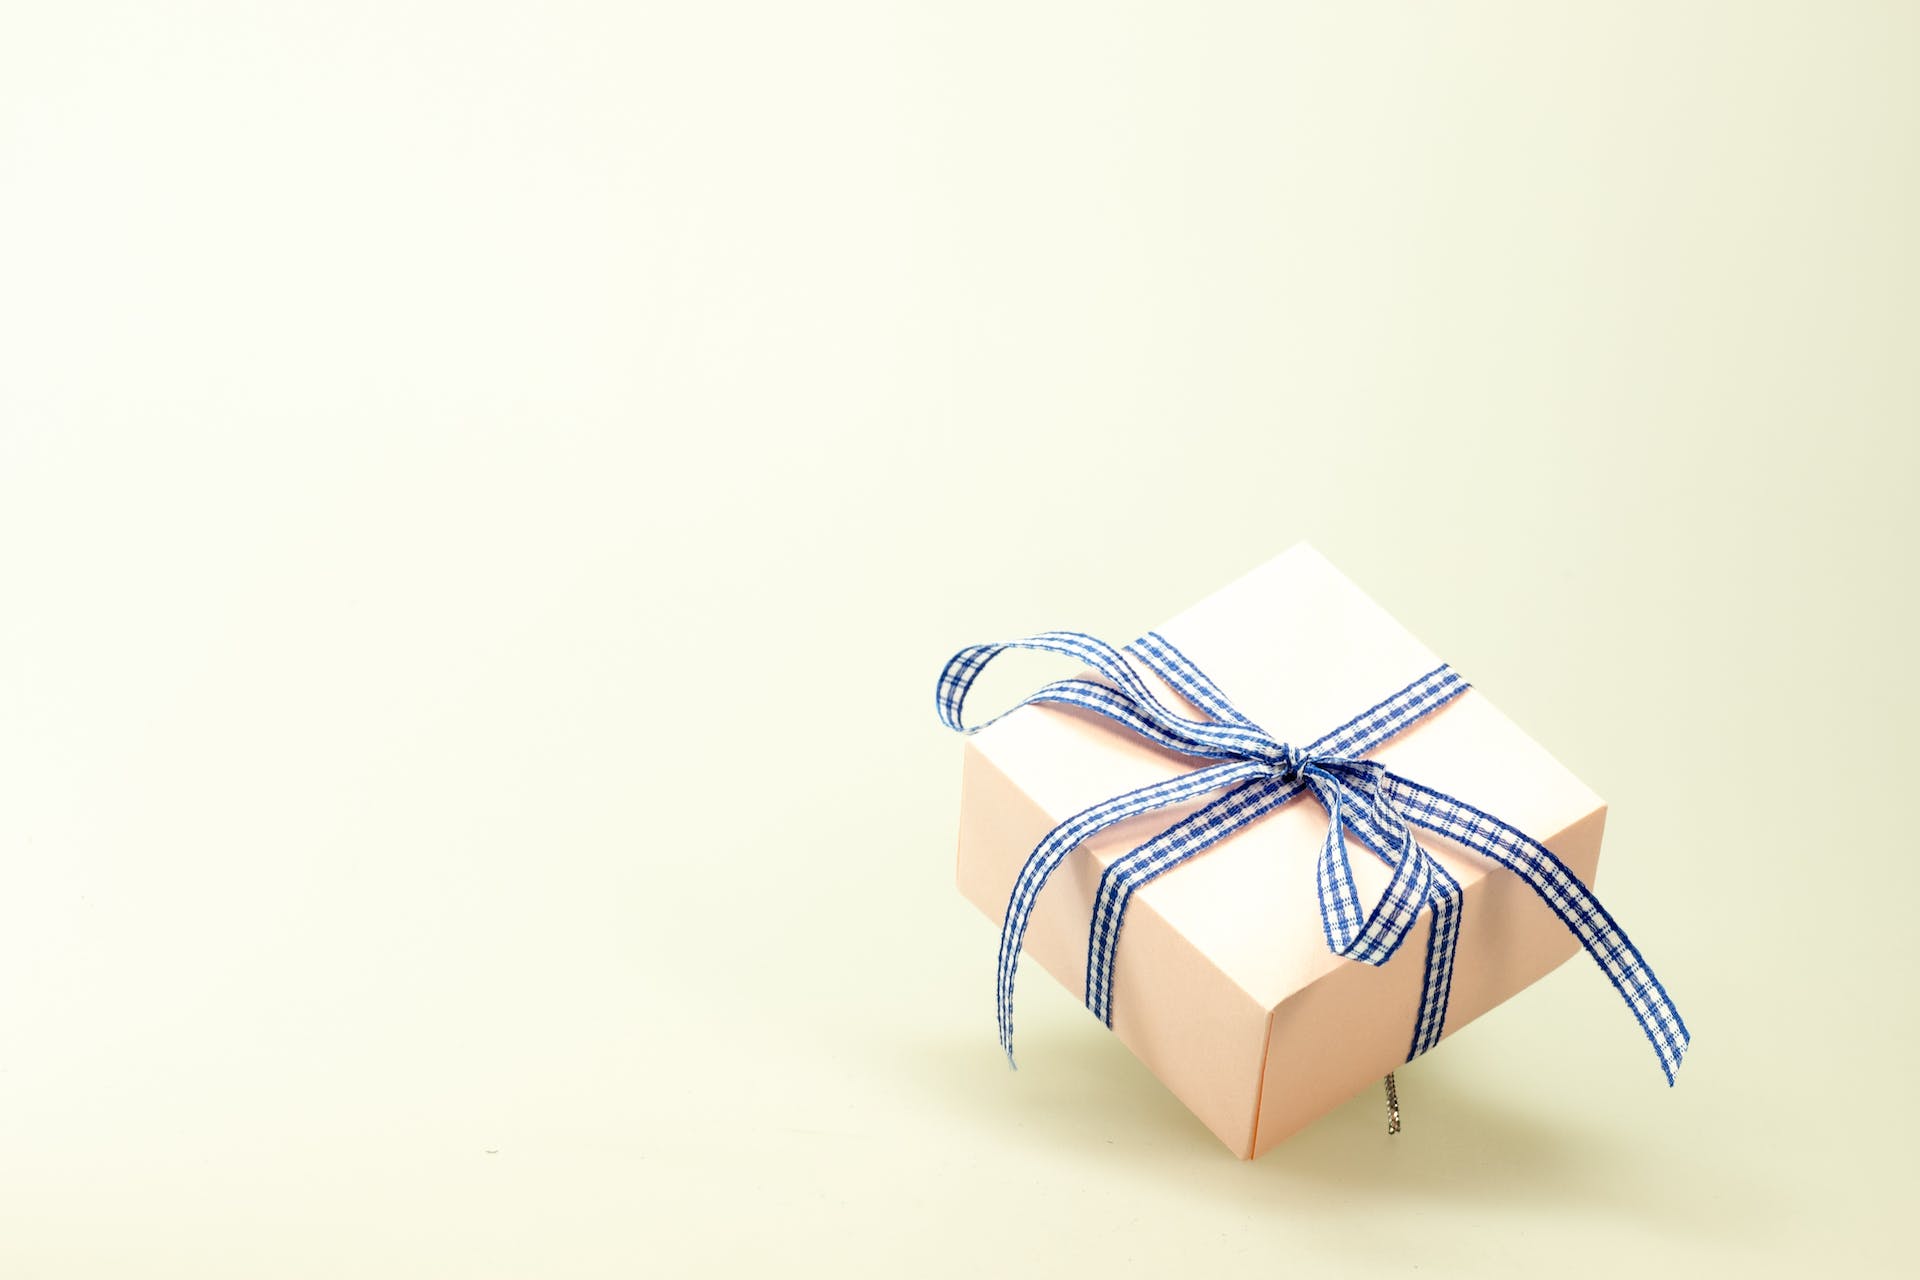 Boîte cadeau blanche avec ruban bleu. | Source : Pexels